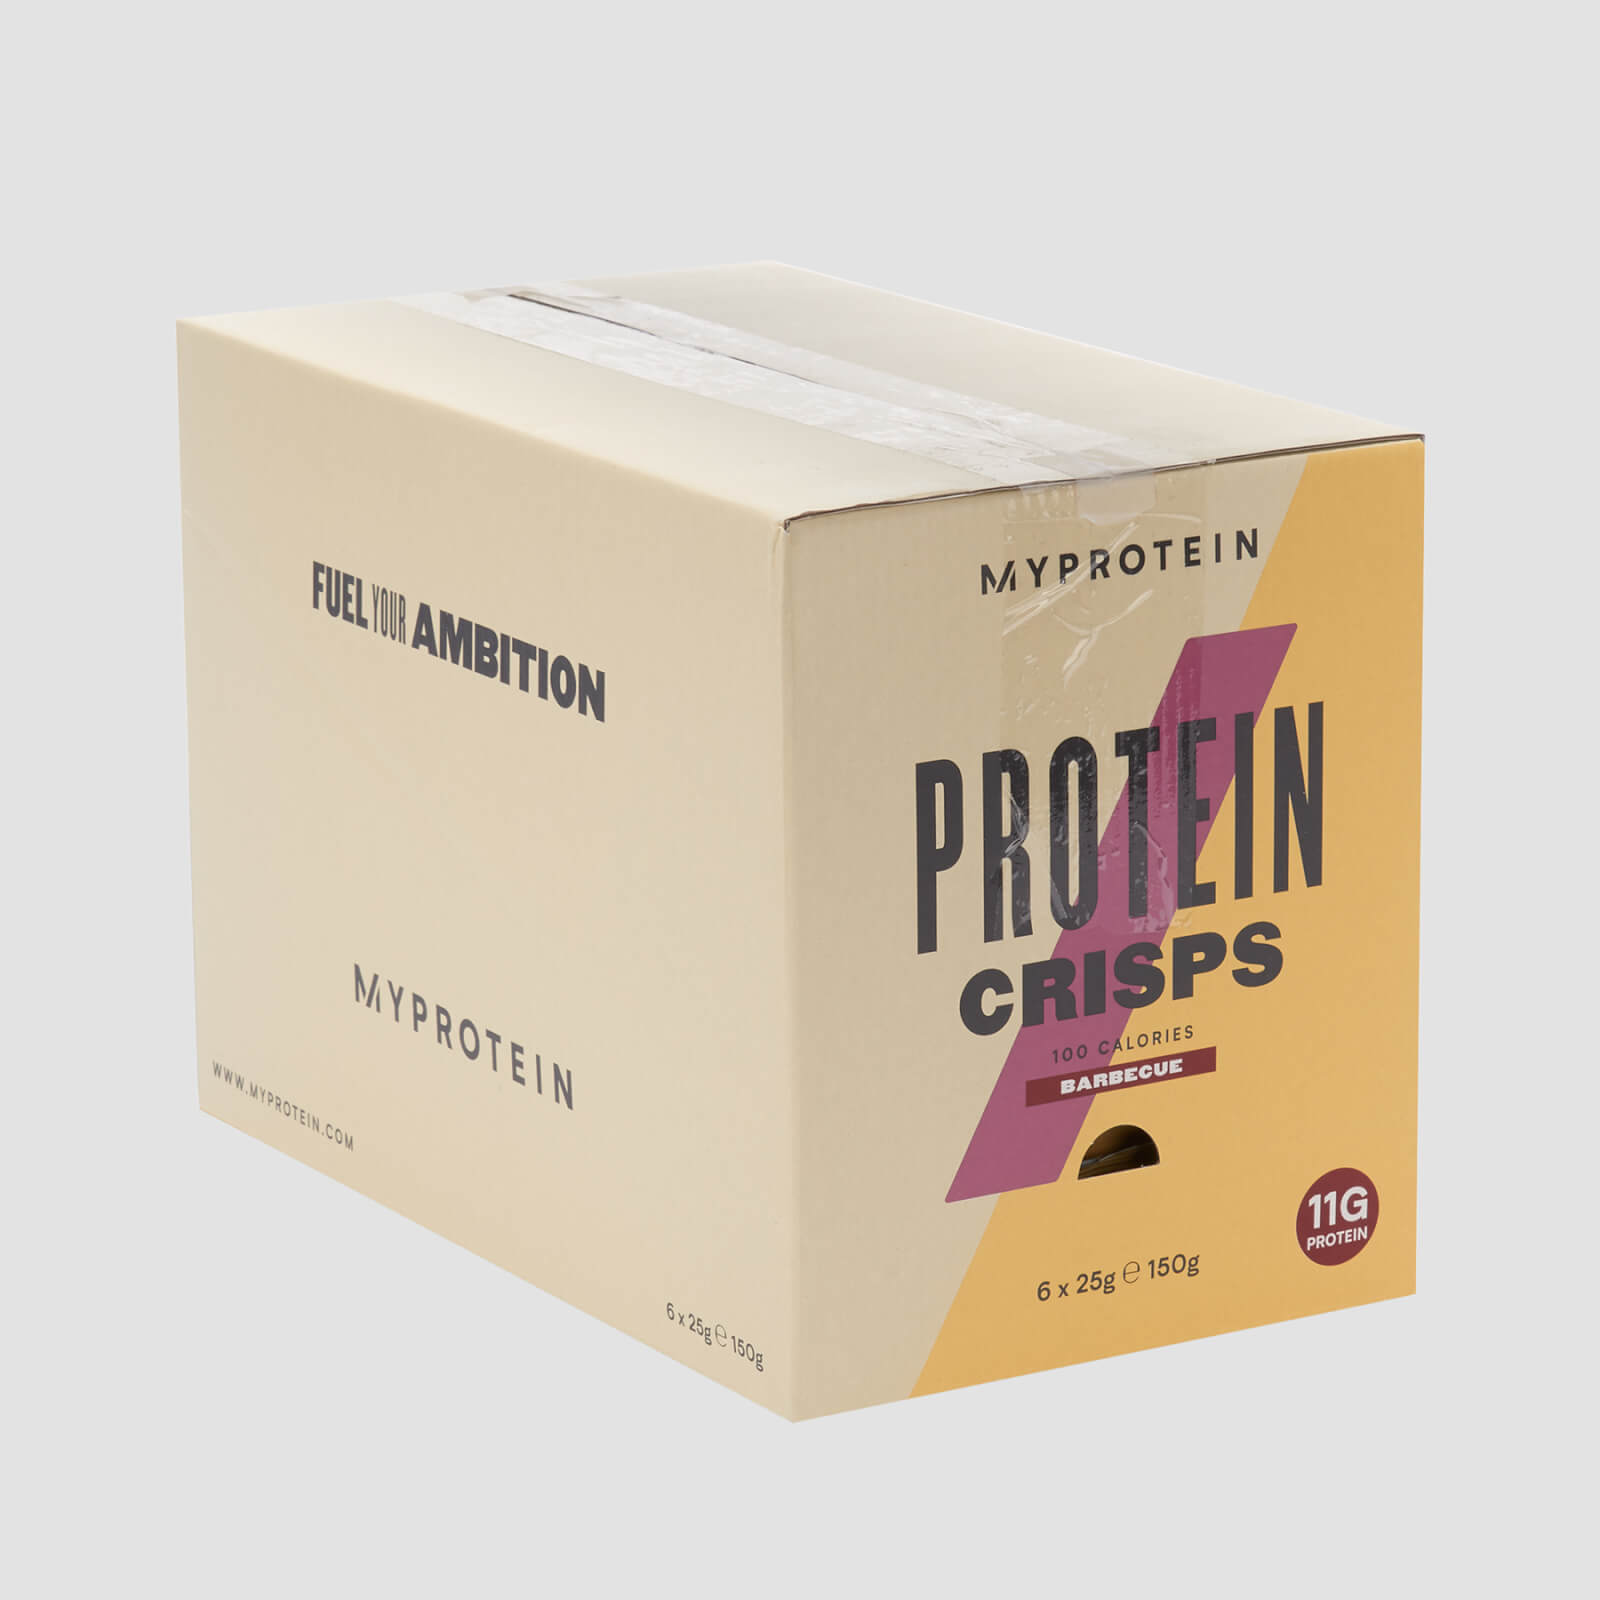 Myprotein Protein Crisps - Barbecue